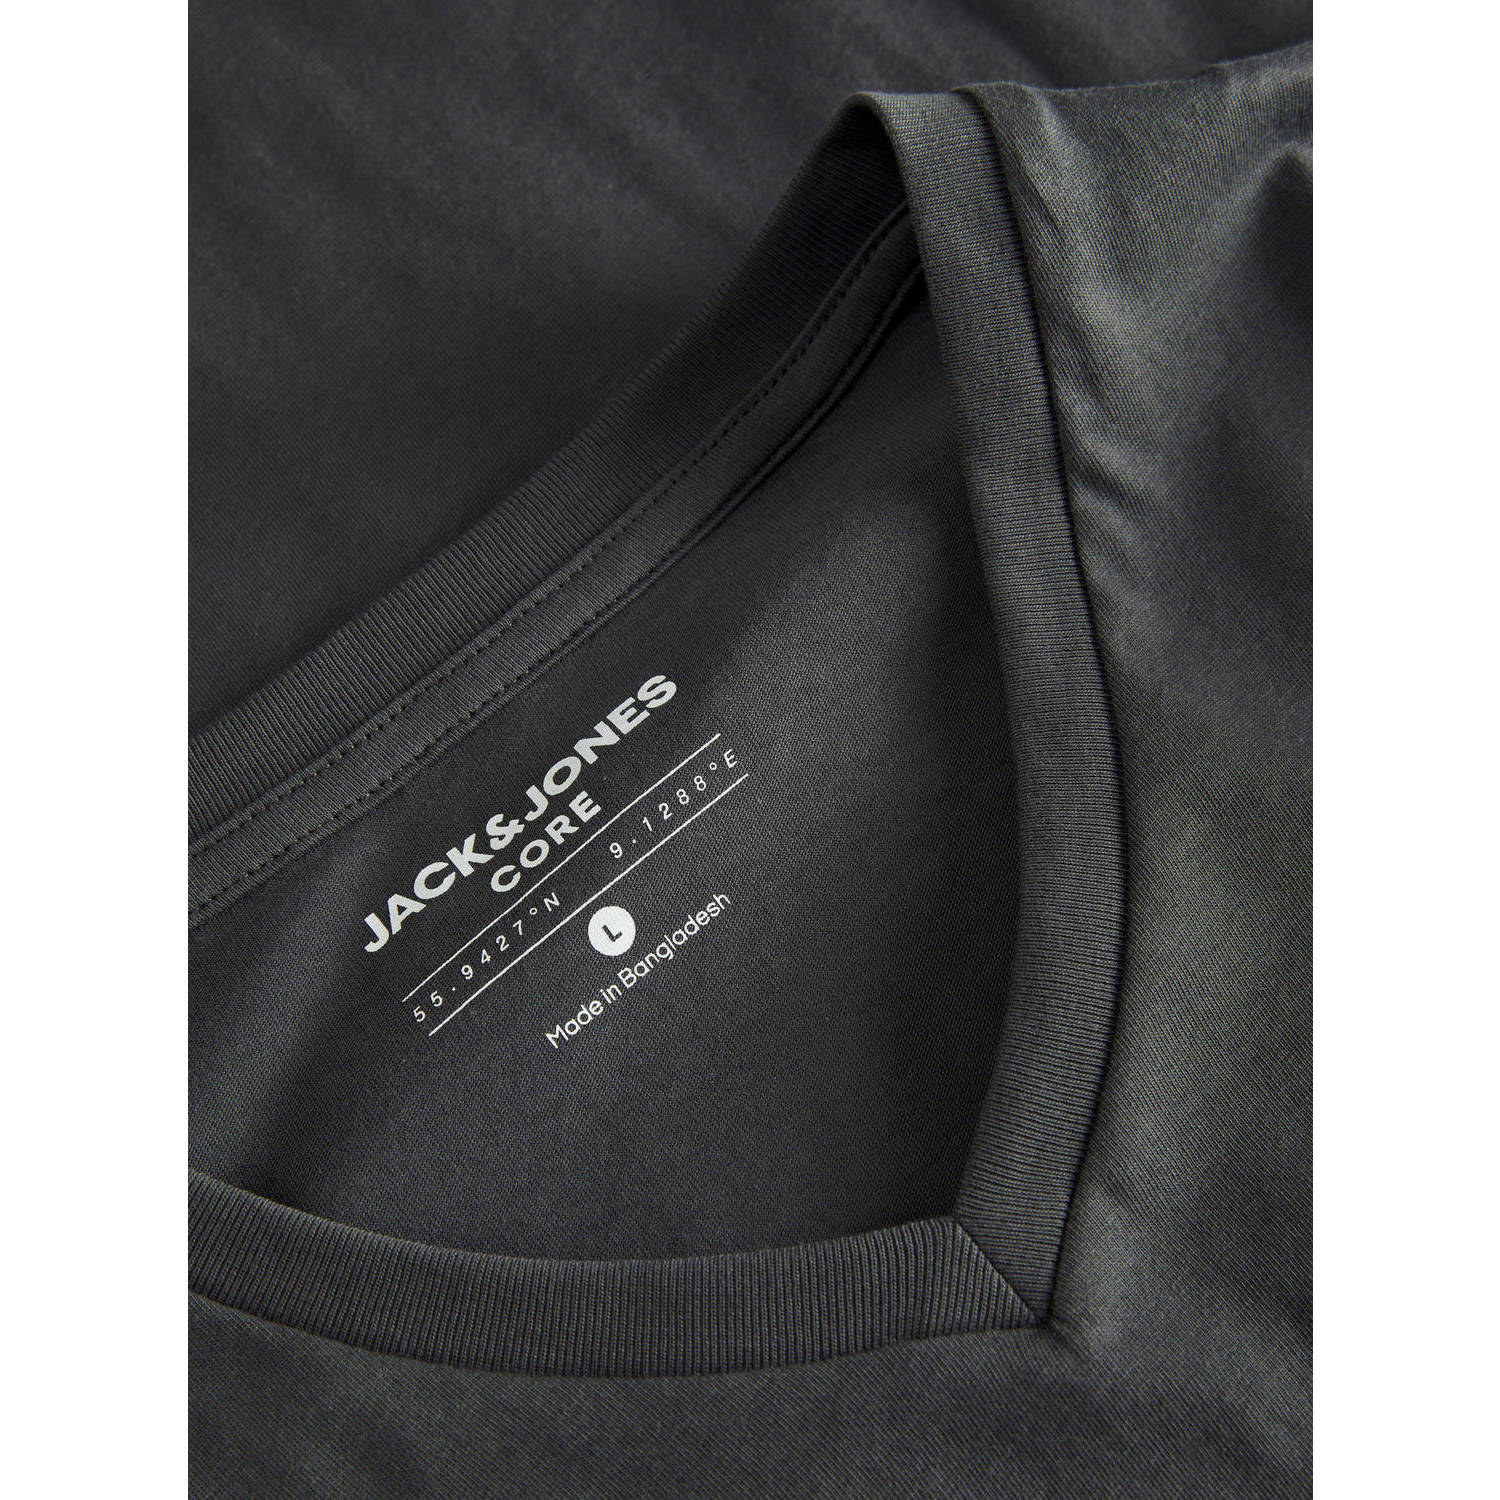 JACK & JONES CORE T-shirt JCOREACH met logo